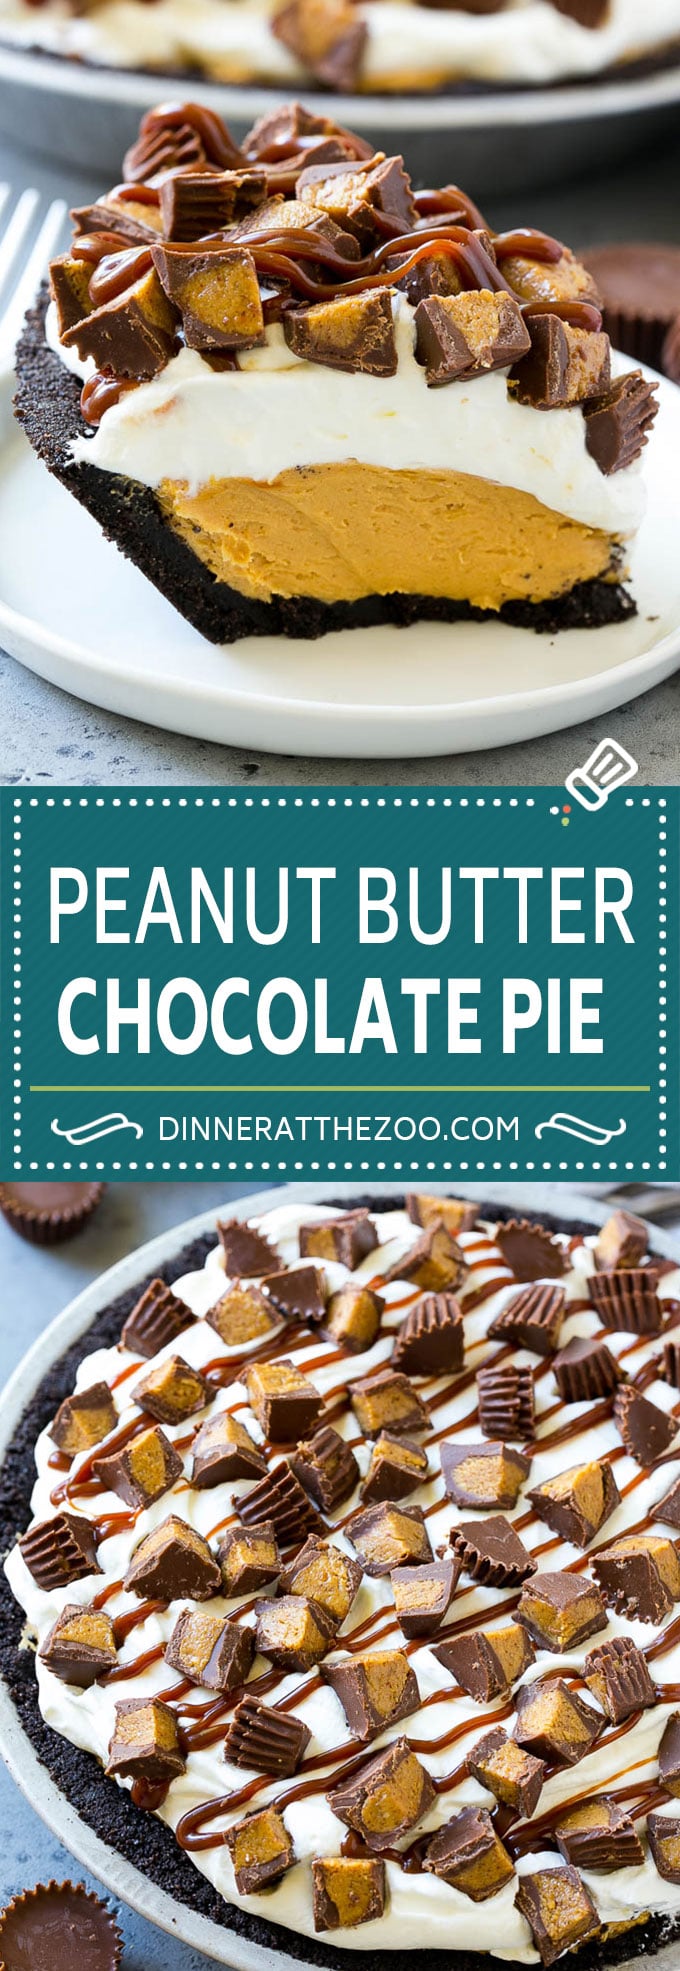 Chocolate Peanut Butter Pie Recipe | Peanut Butter Cup Pie | Peanut Butter Pie | No Bake Pie #chocolate #peanutbutter #pie #nobake #dessert #dinneratthezoo